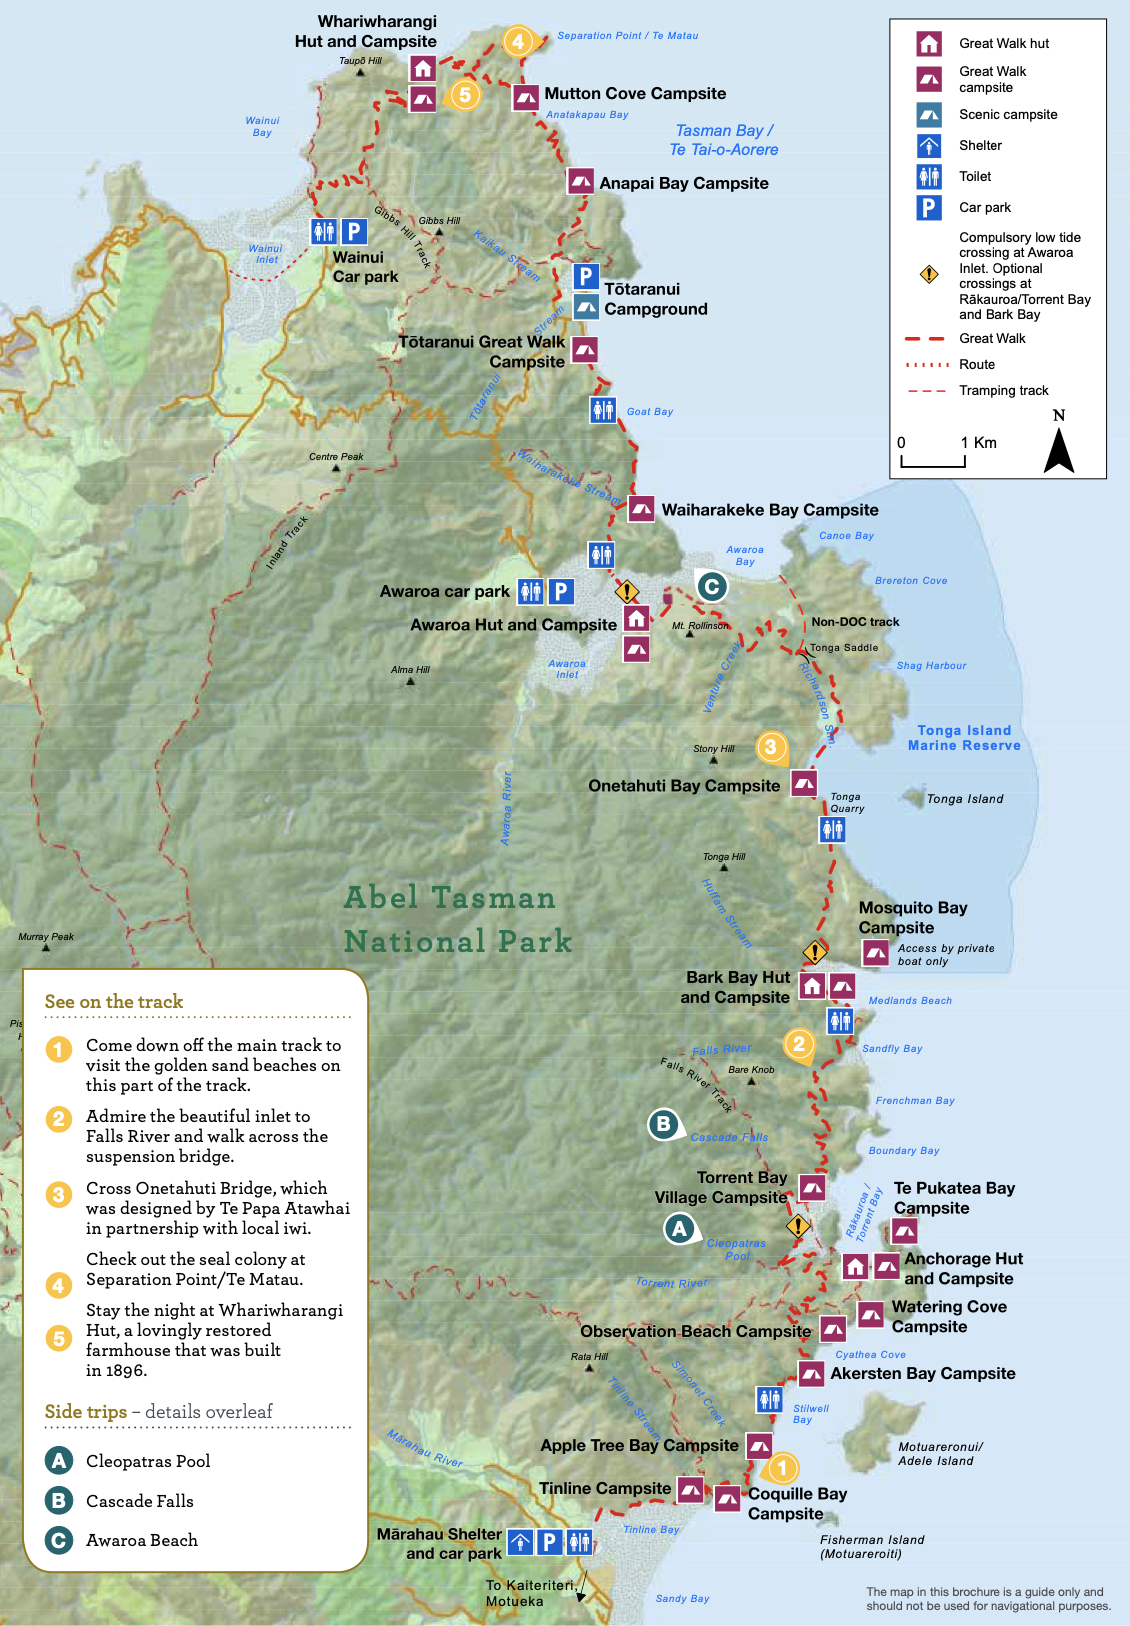 able-tasman-coastal-track-walking-guide.png